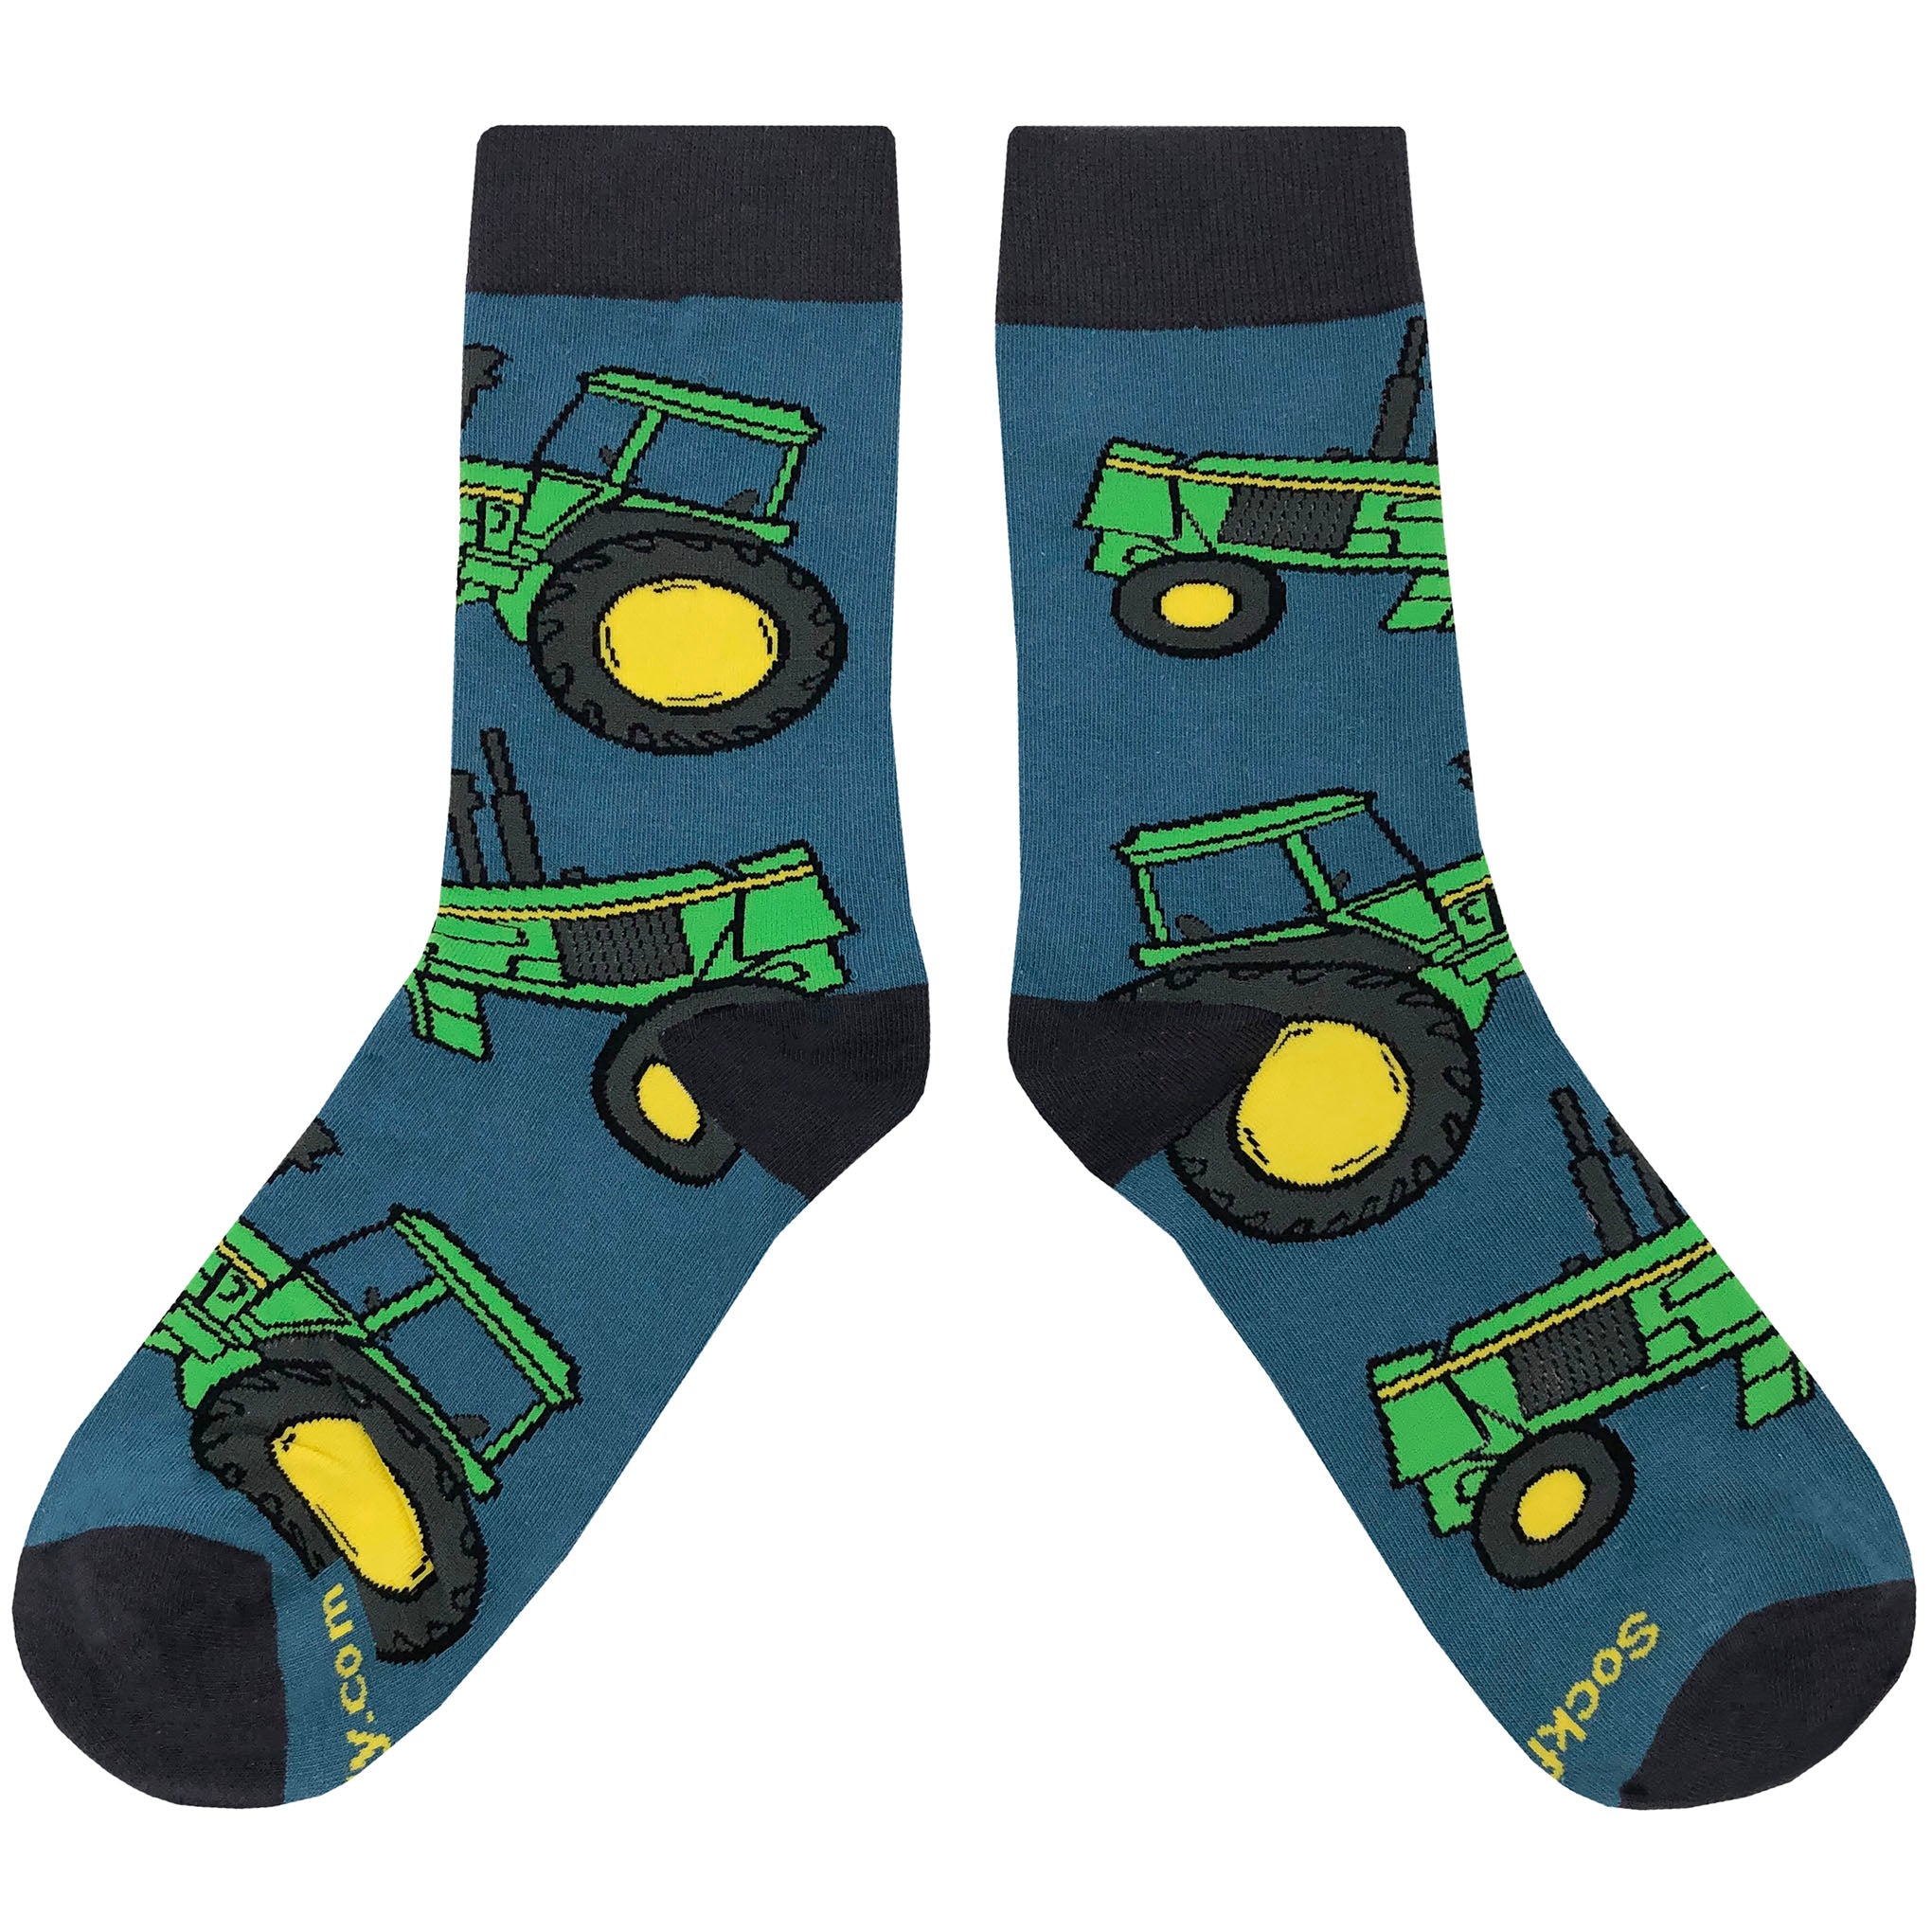 Tractor Socks - Fun and Crazy Socks at Sockfly.com